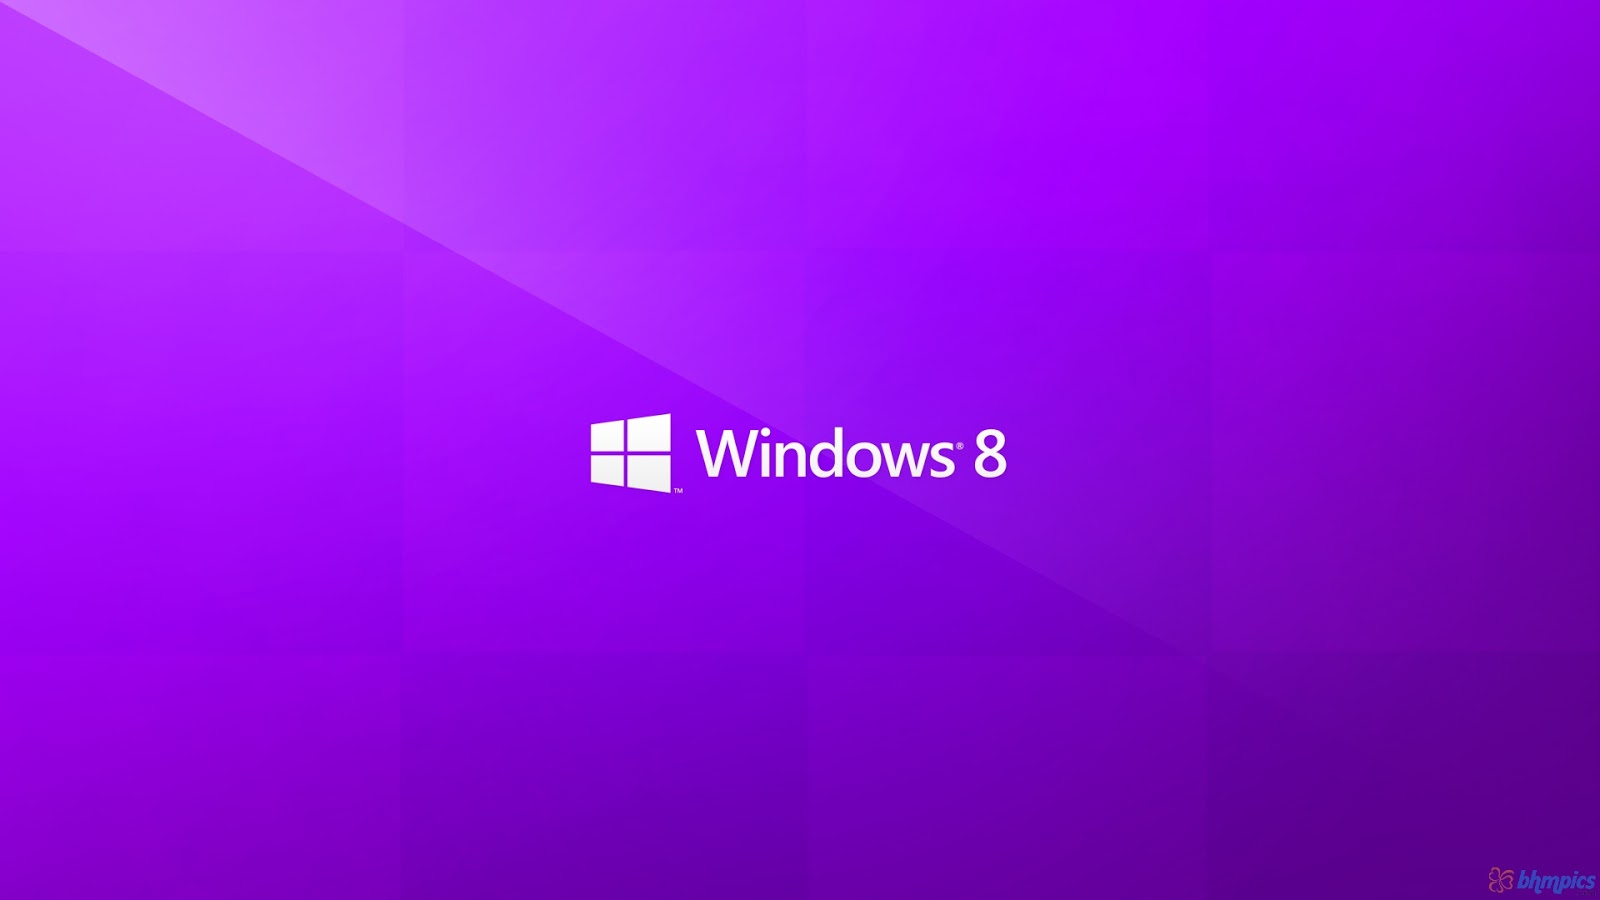  Download Windows 8 Metro Purple Wallpaper Windows 8 Metro Purple